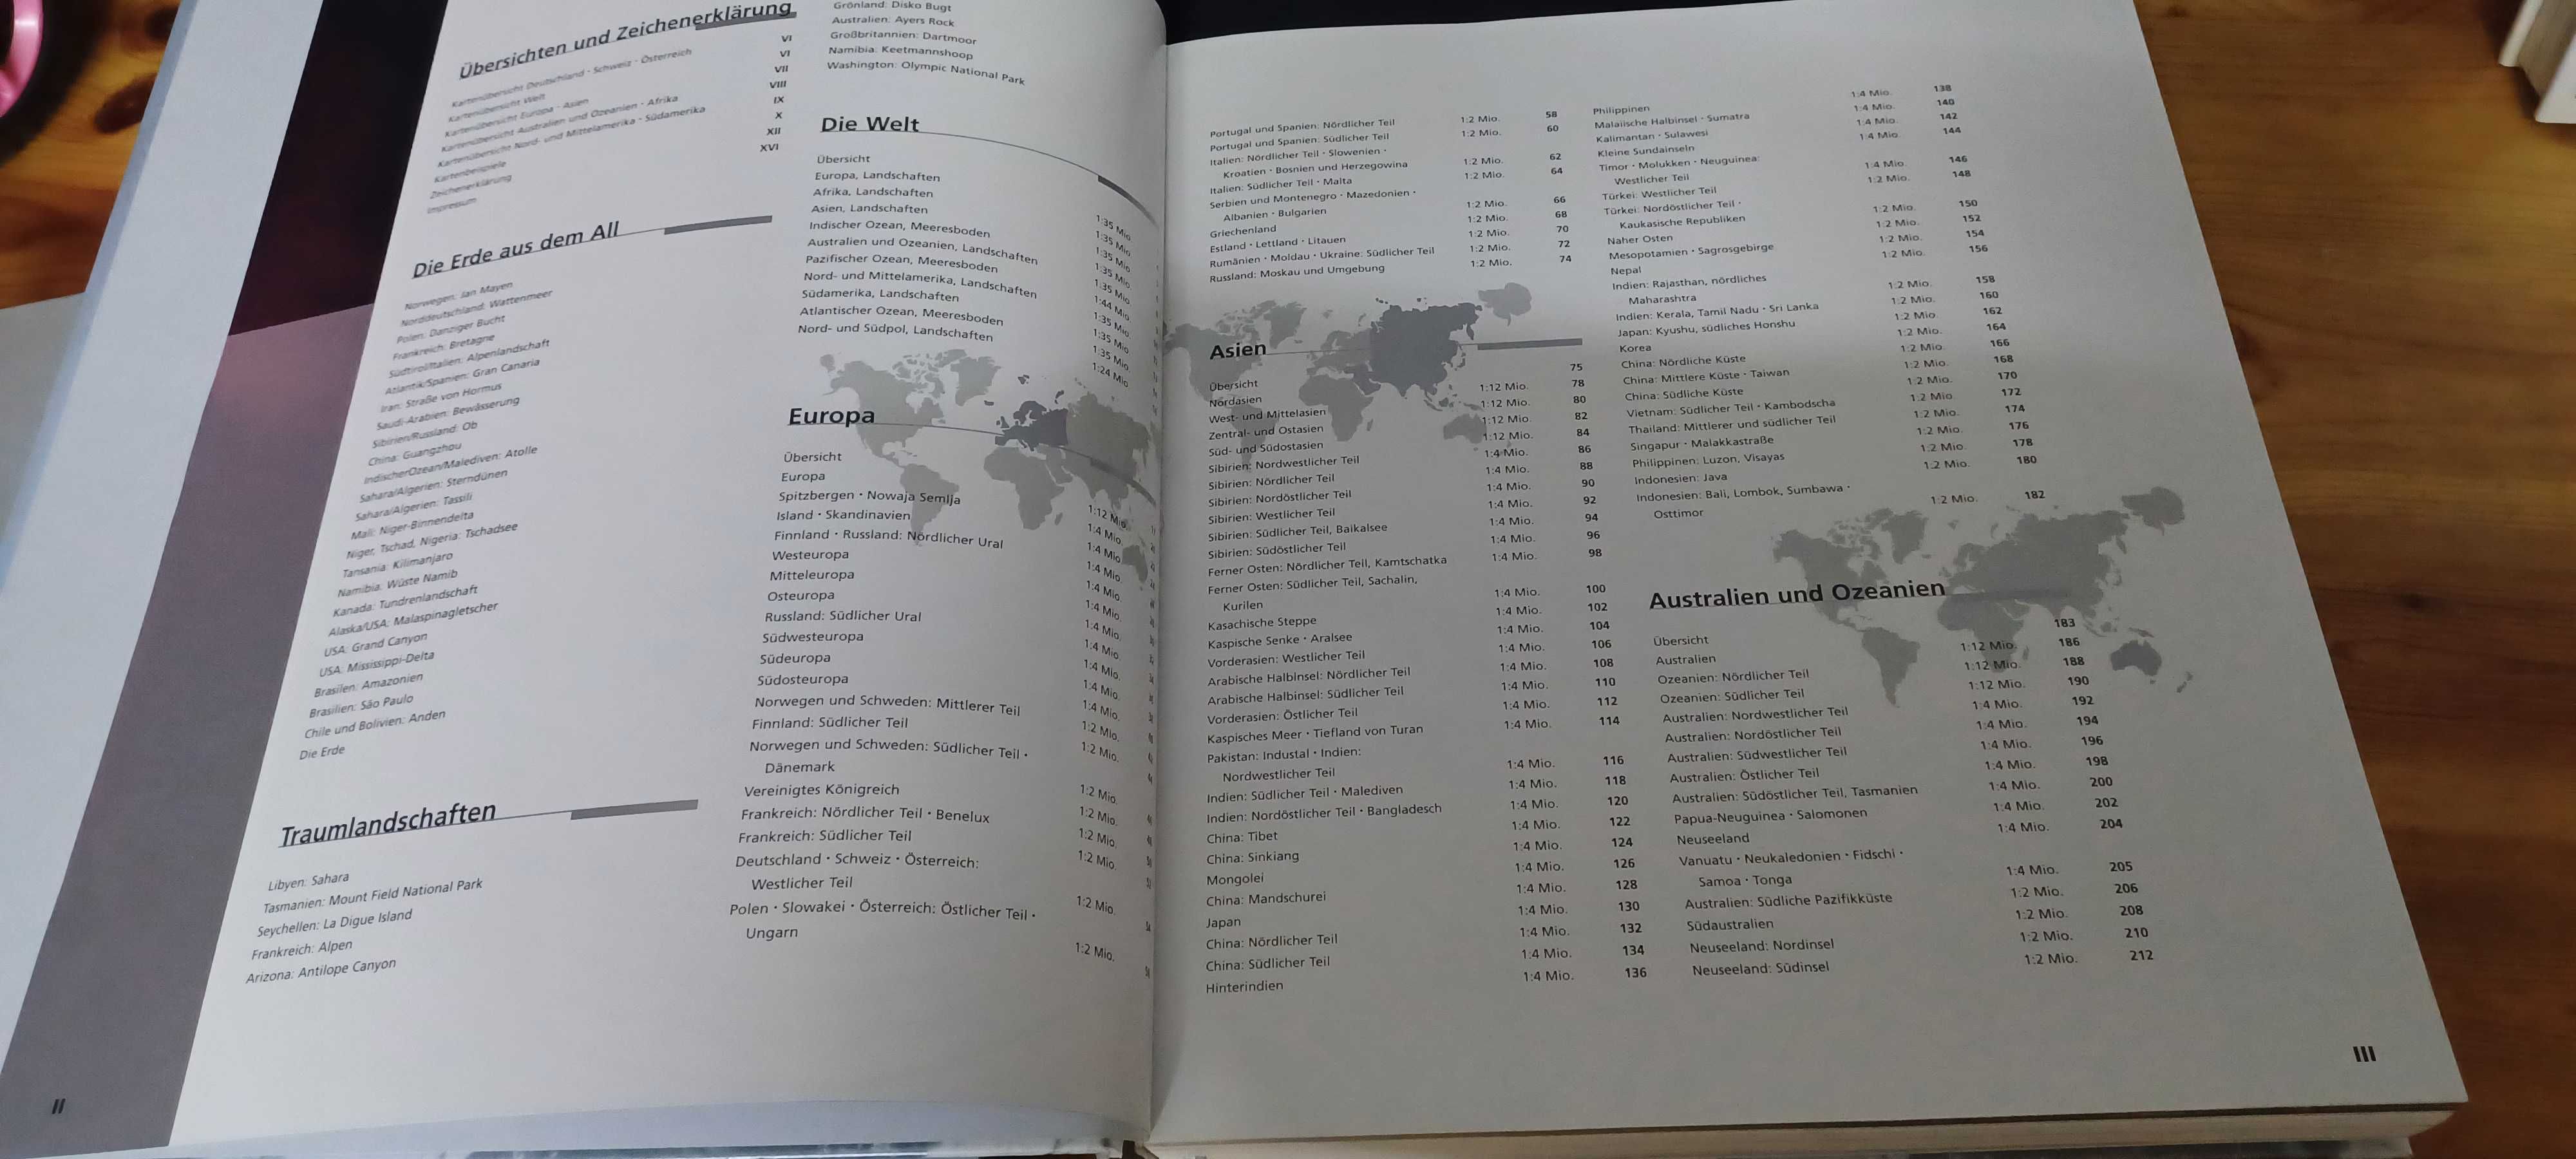 Vand 2 atlase geografice in limba germană